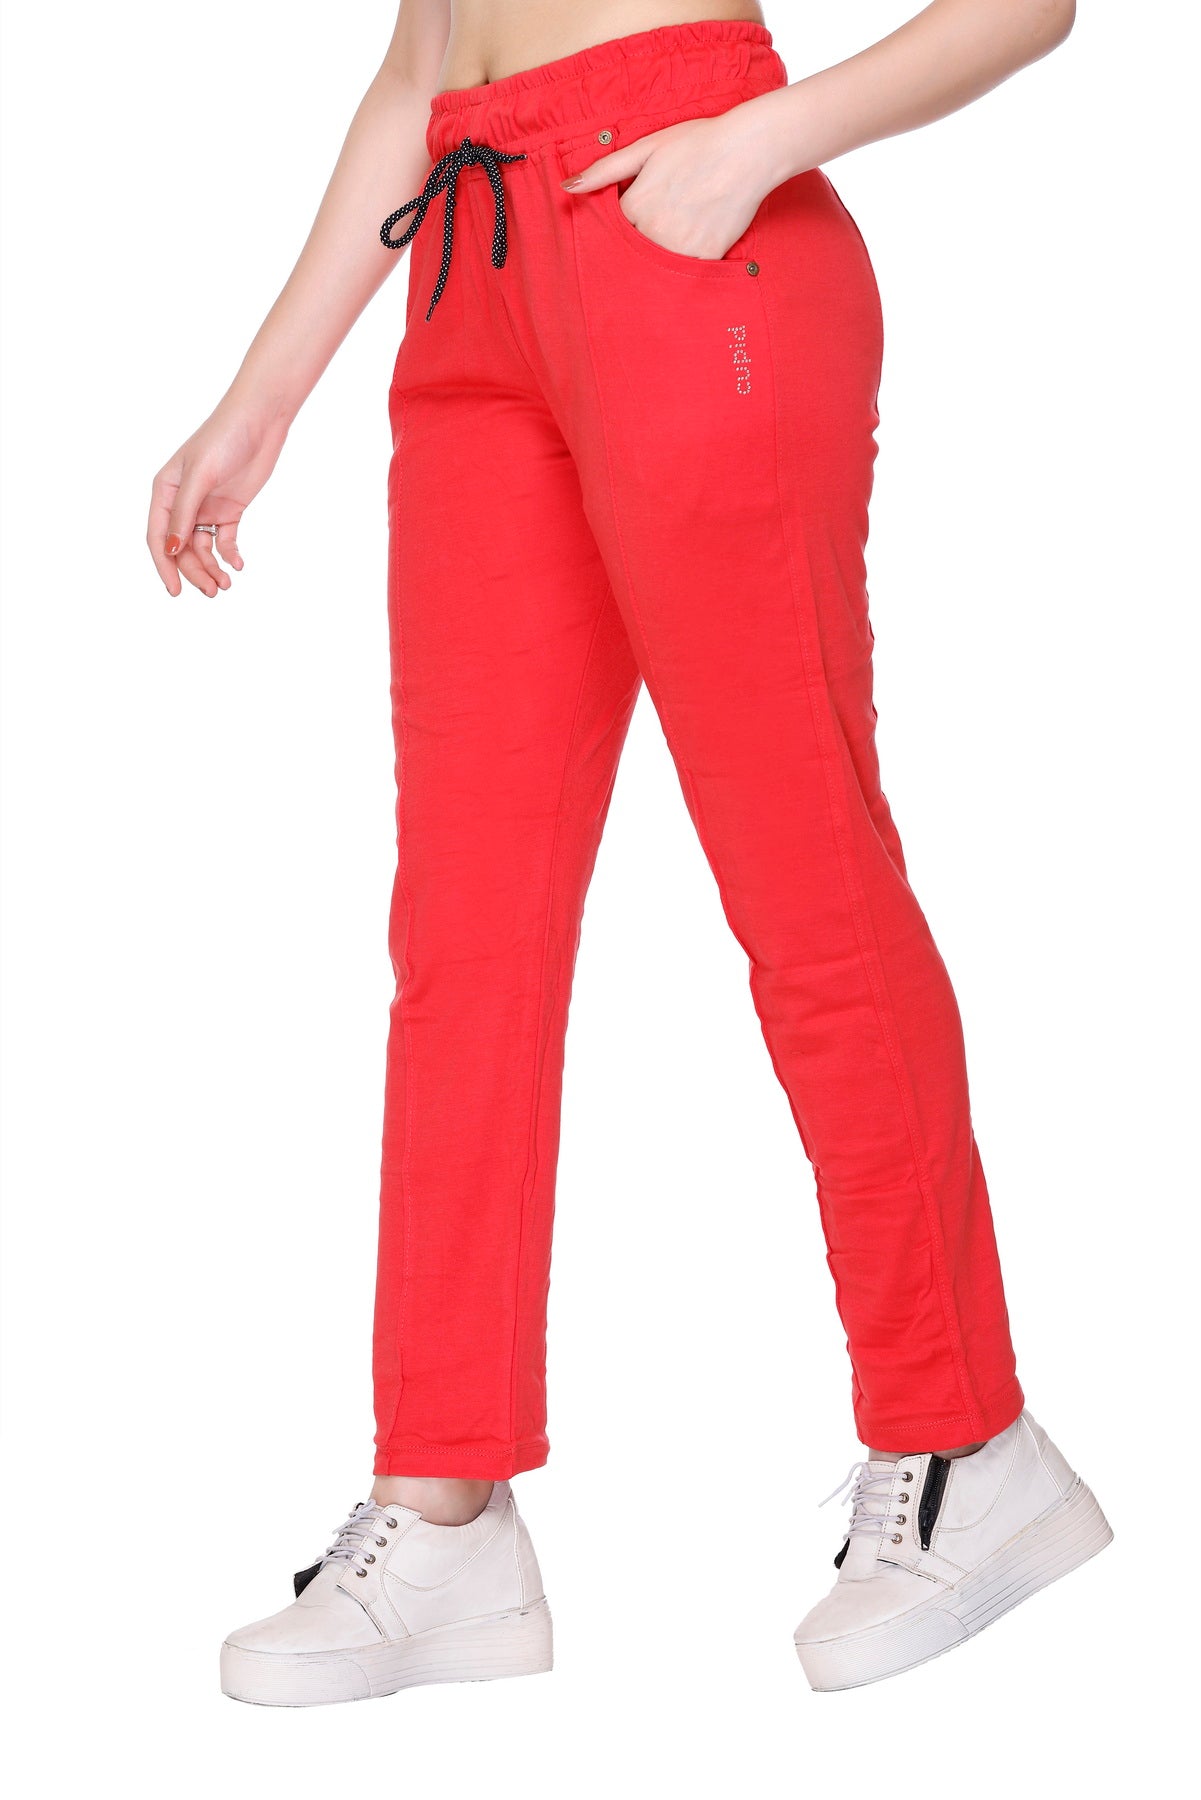 Wide track pants - Pink/White - Ladies | H&M IN